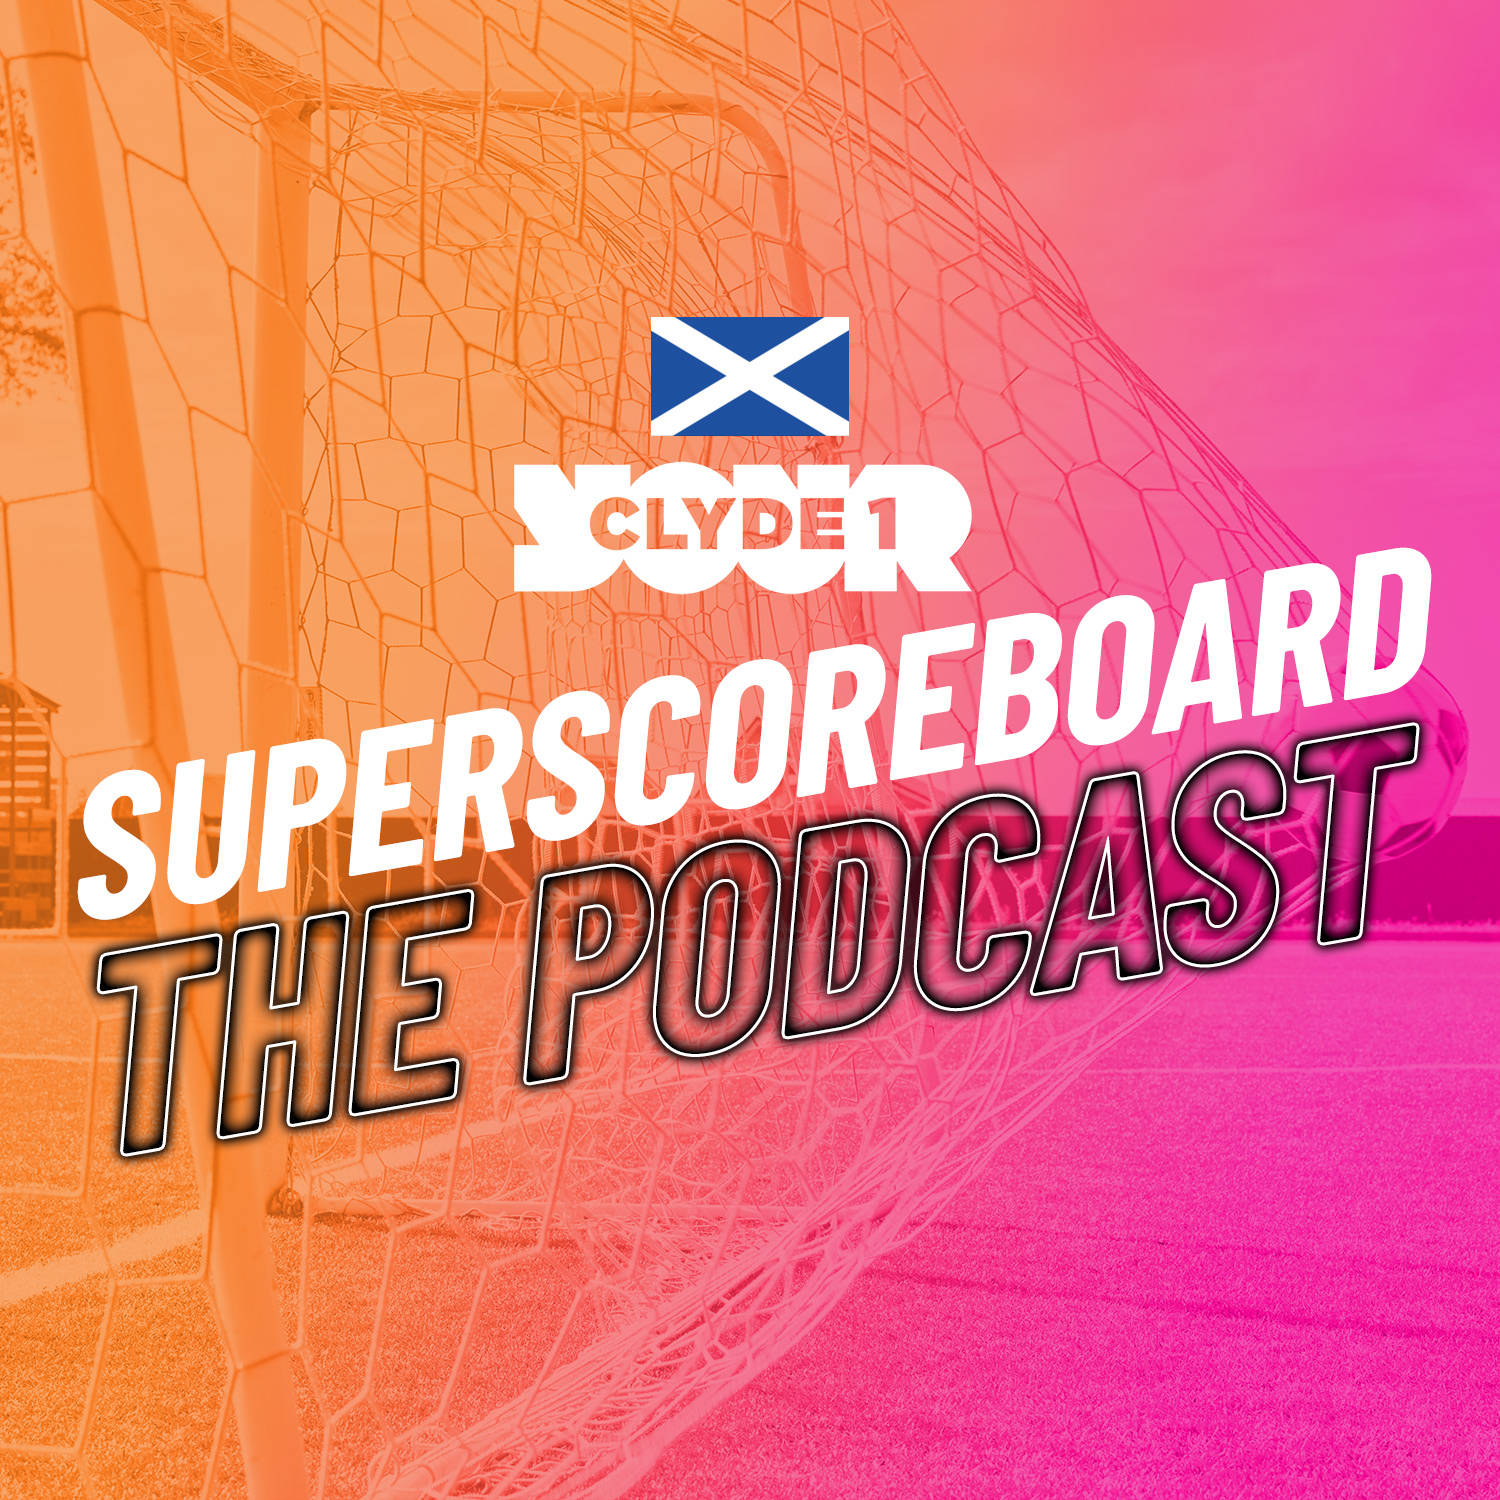 Monday 1st April Clyde 1 Superscoreboard